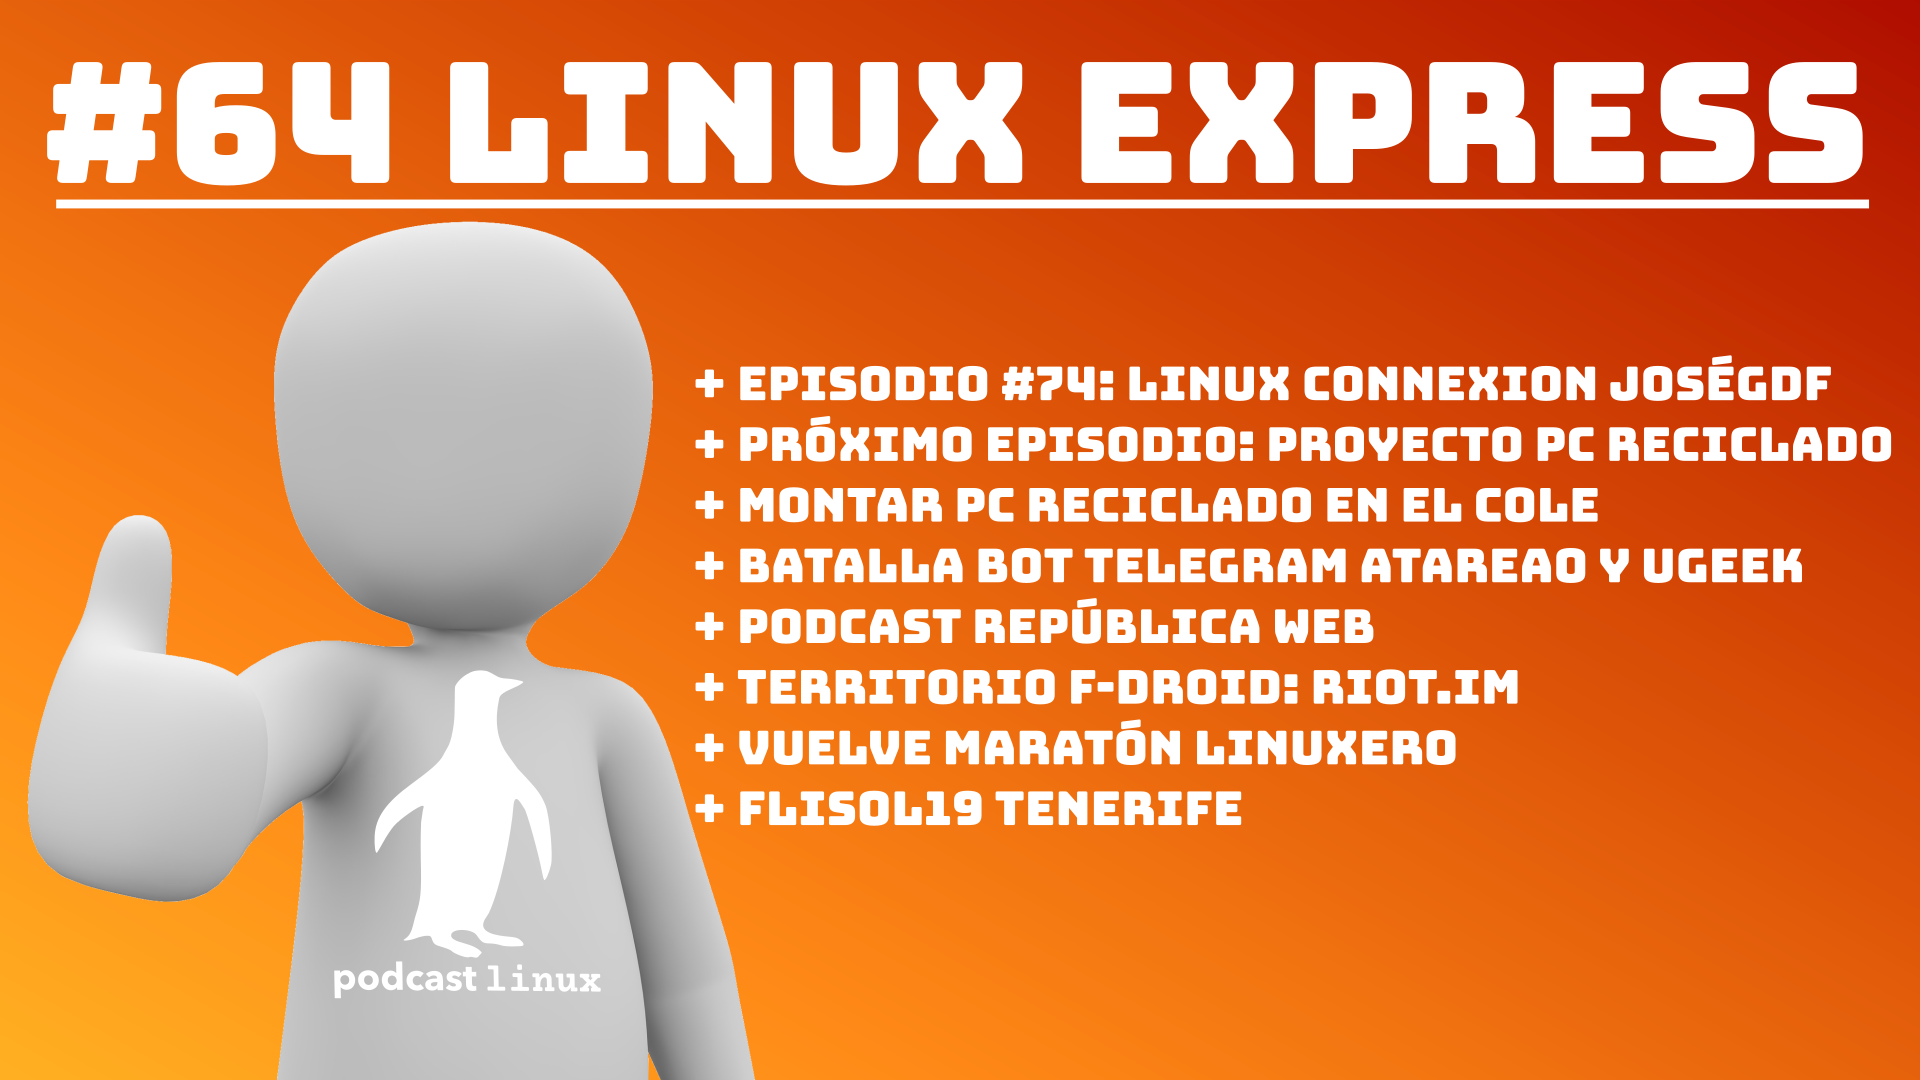 #64 Linux Express